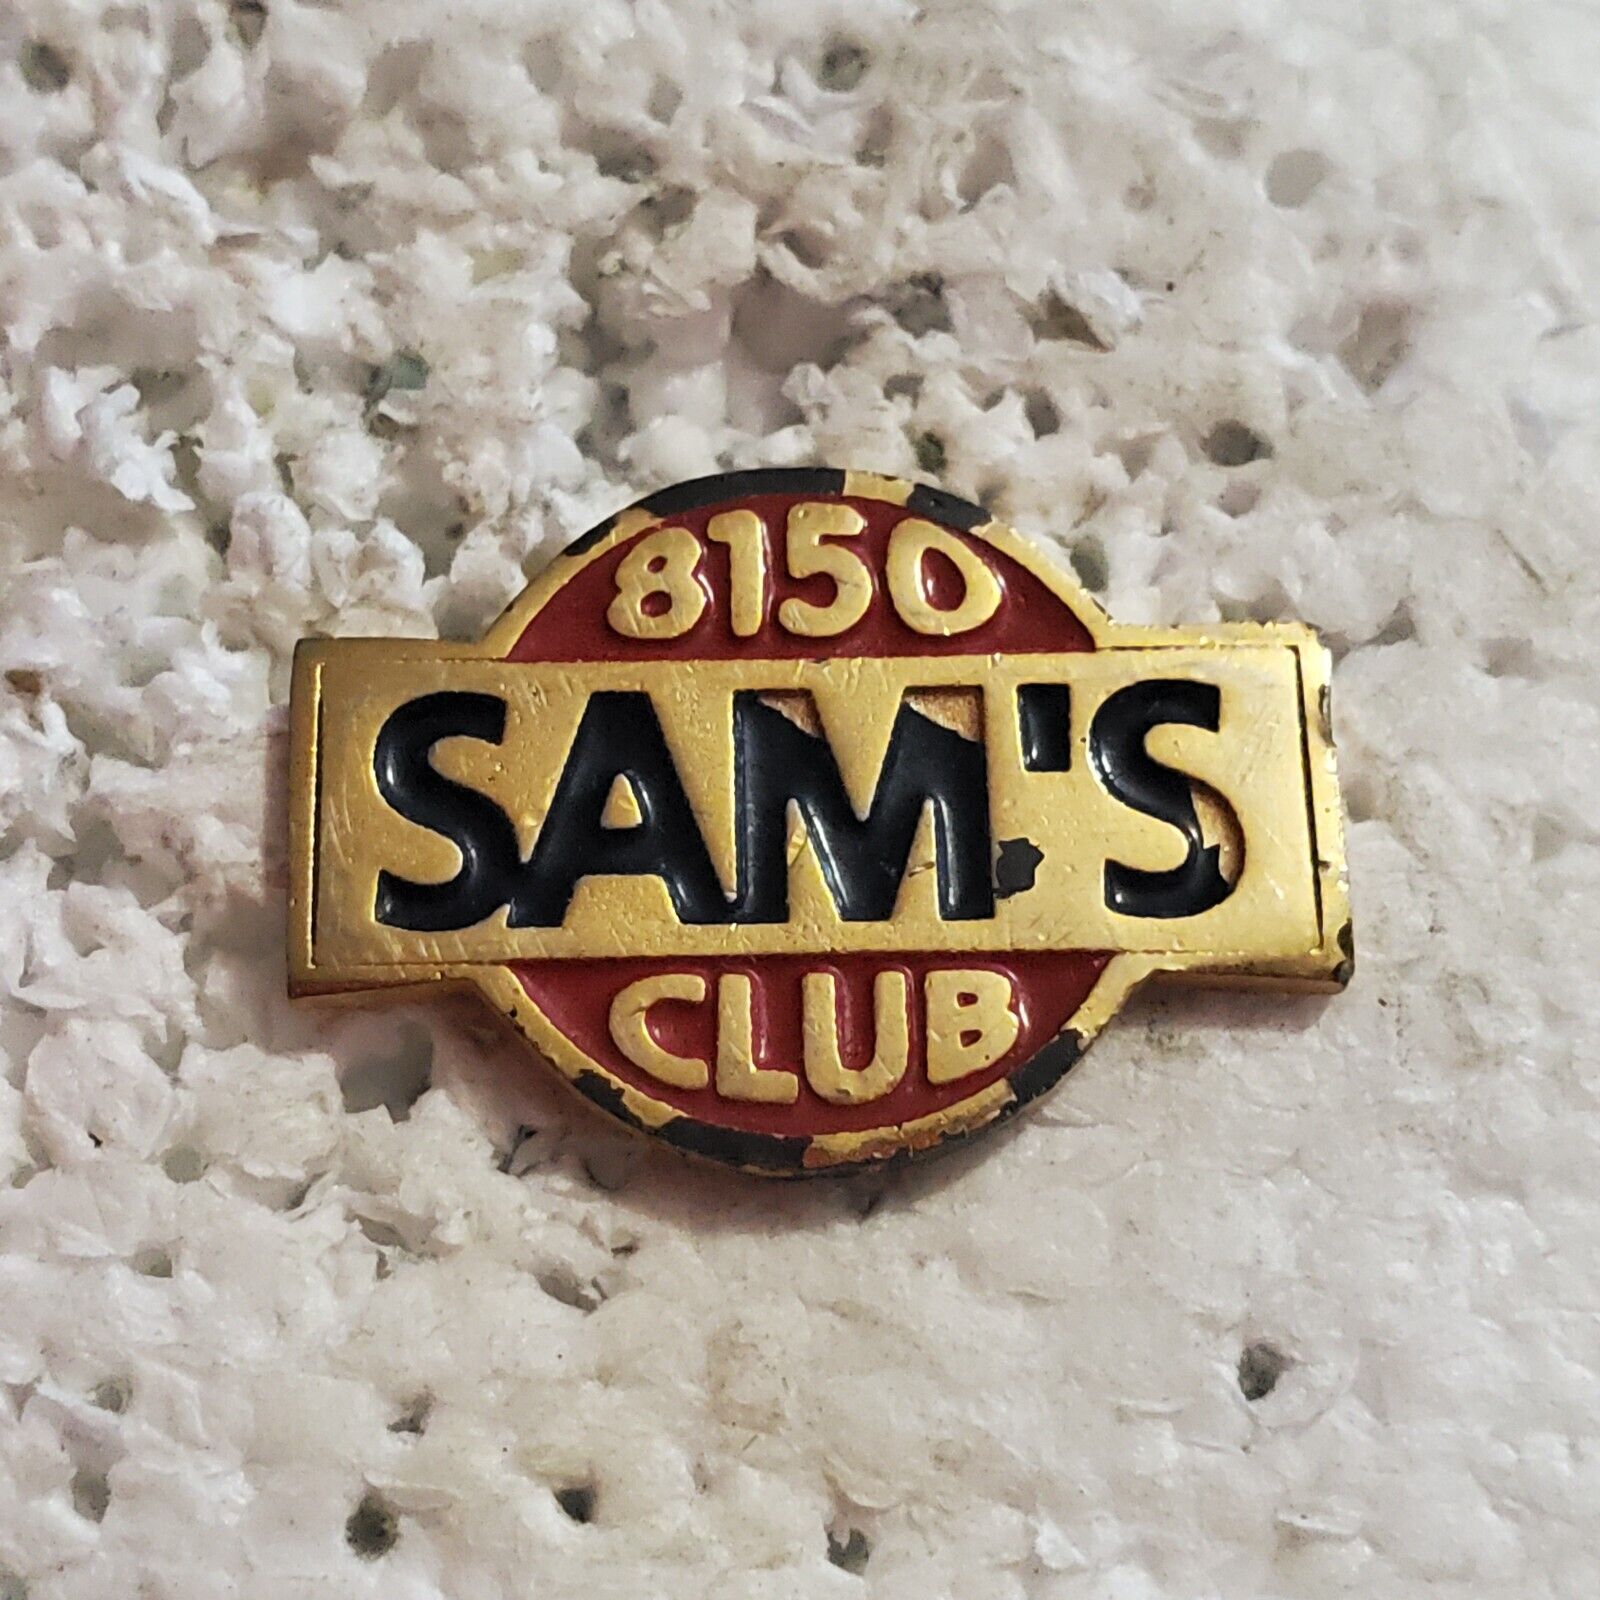 Official Sams Club Walmart Lapel Hat Pin Store #8150 Port St Lucie Florida FL